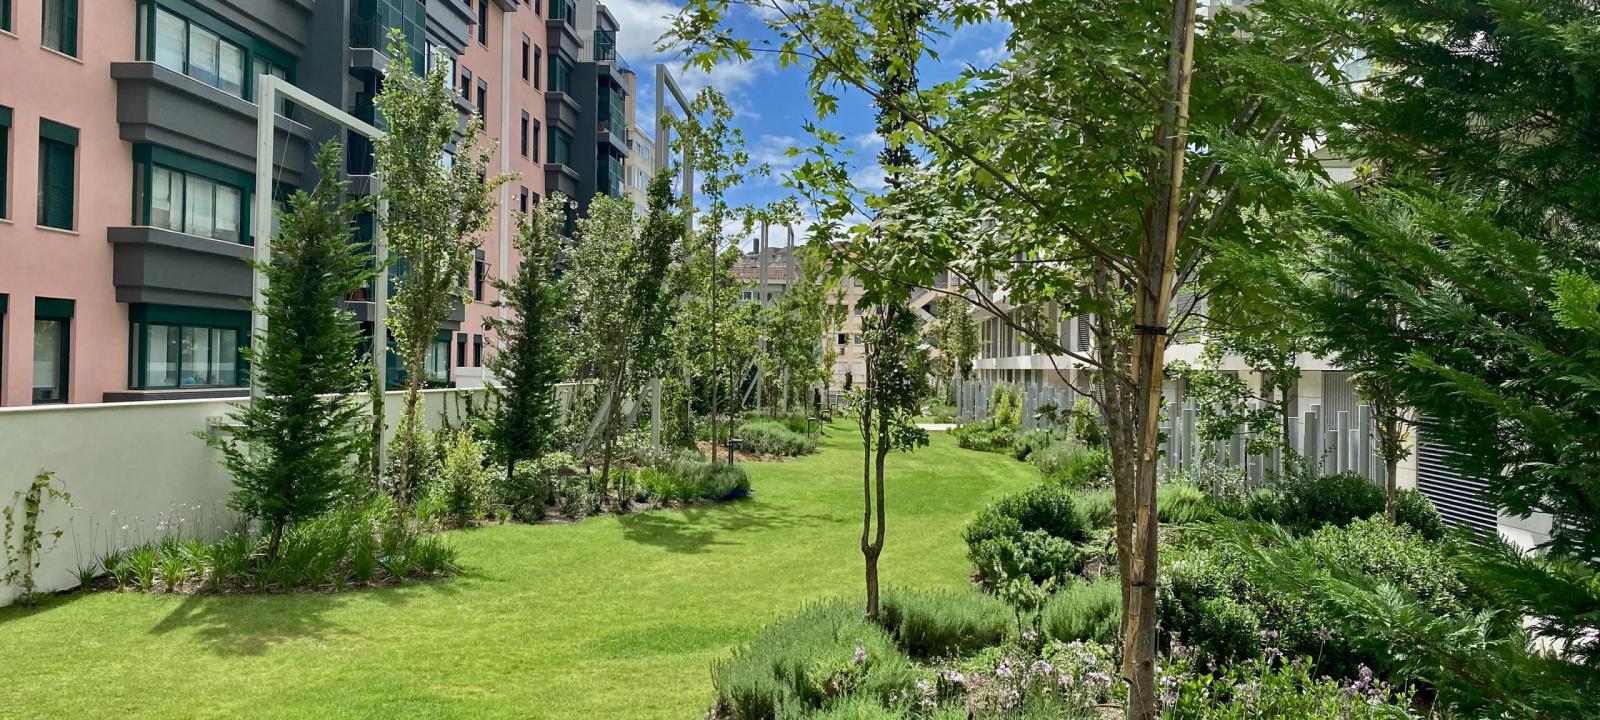 Green residential courtyard